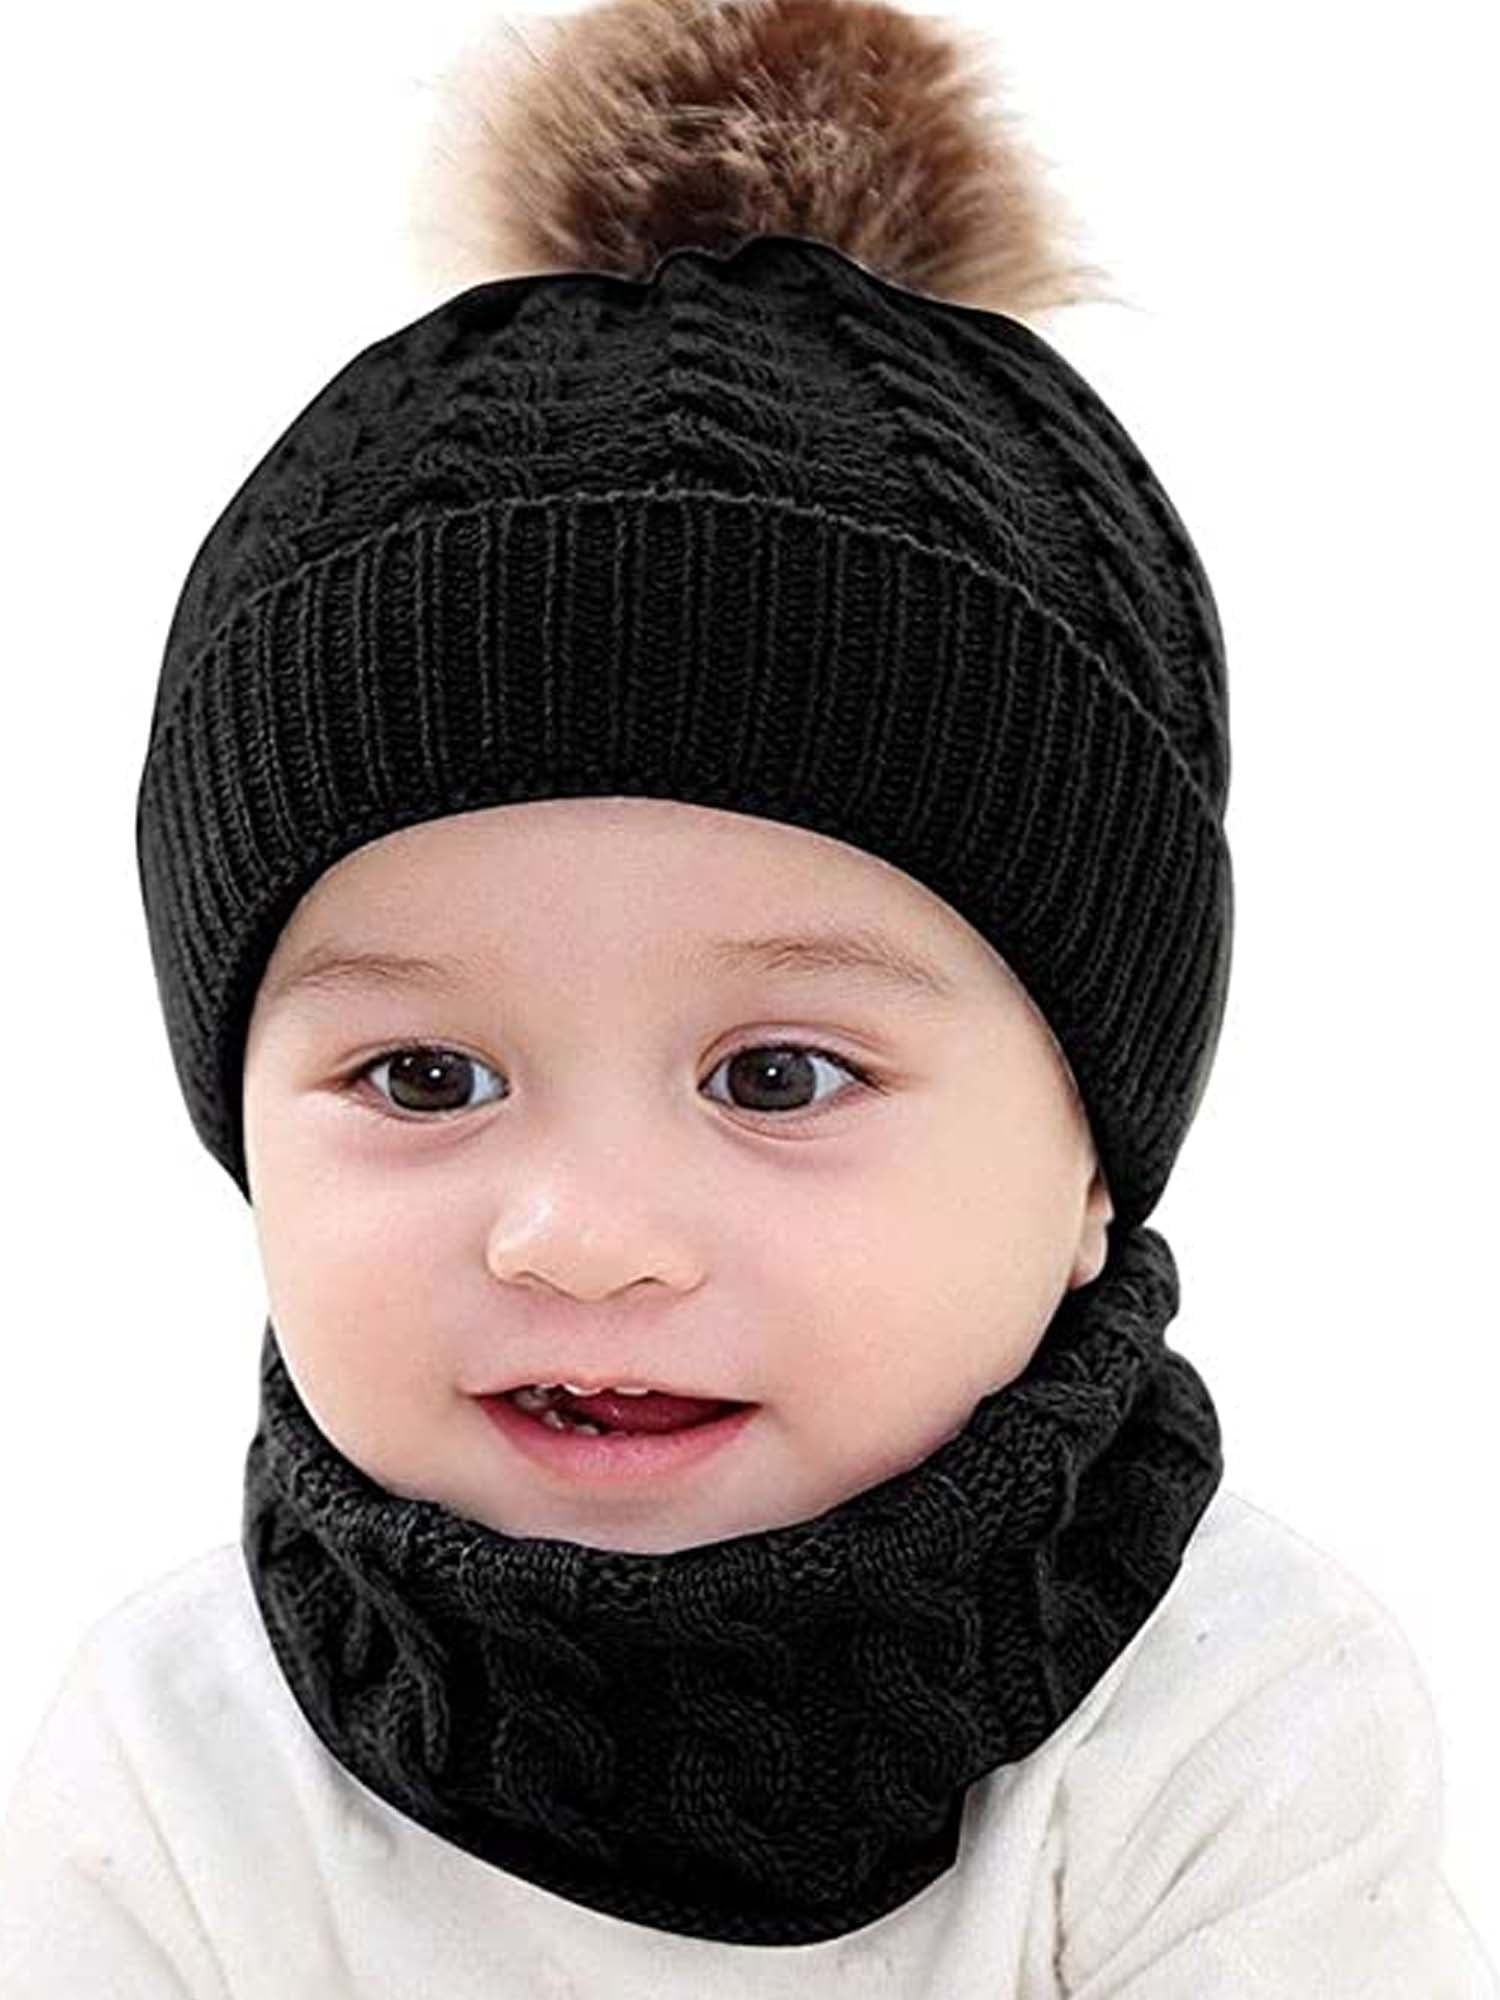 2pcs Unisex Child Beanies Cap Set Baby Kids Knit Hat And Scarf Warm Winter Suit 